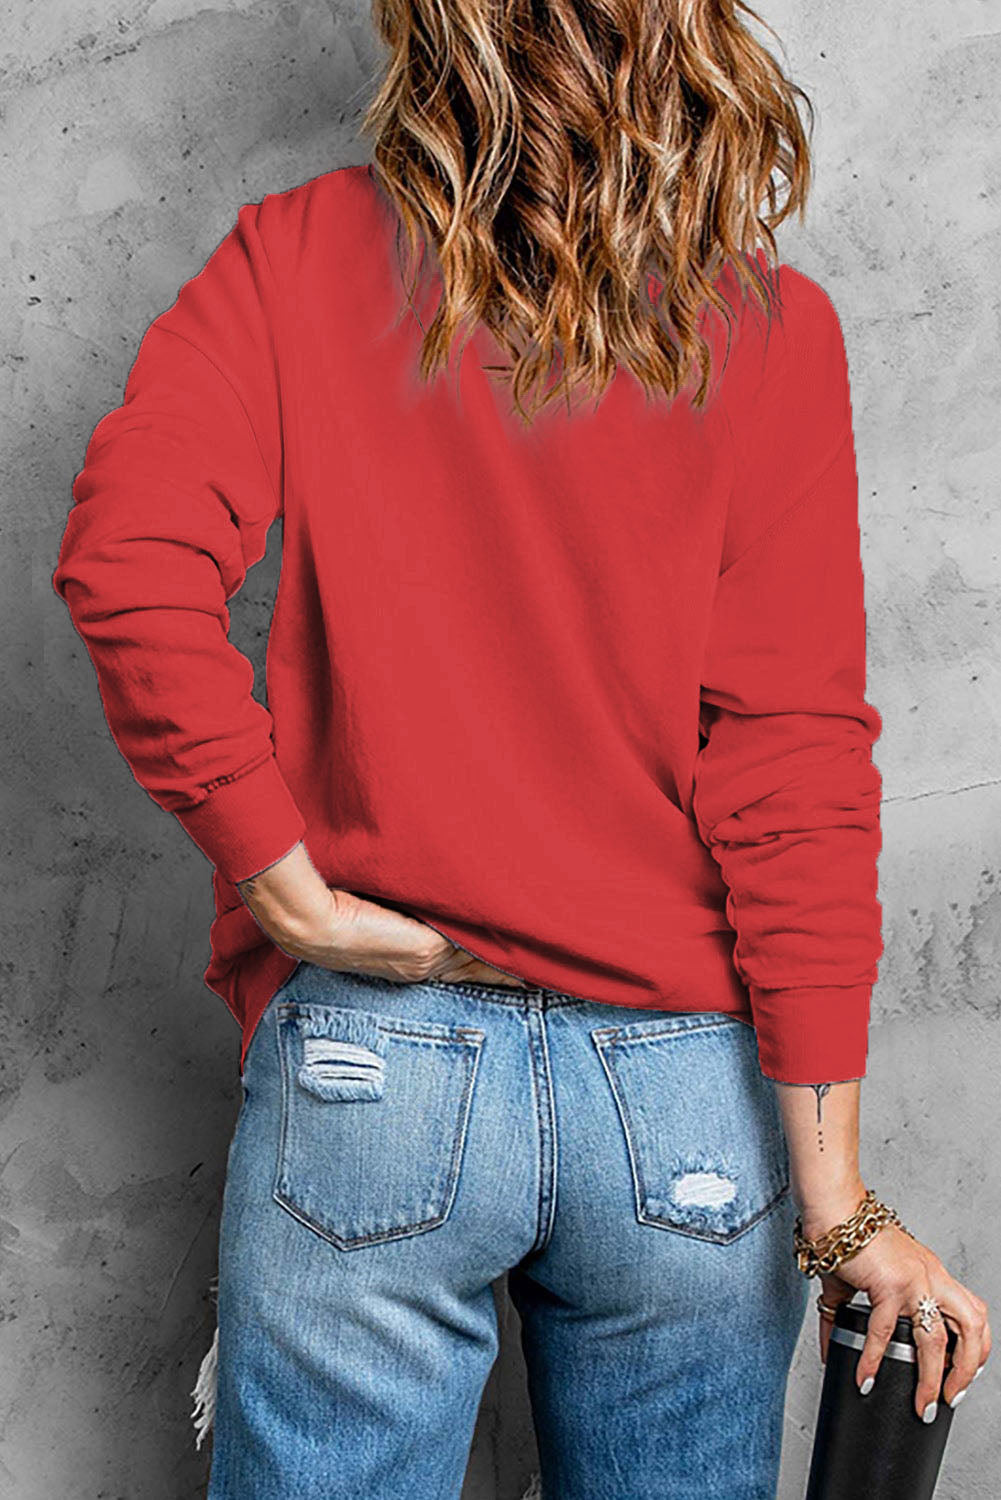 Red Merry Mama Long Sleeve Pullover Sweatshirt